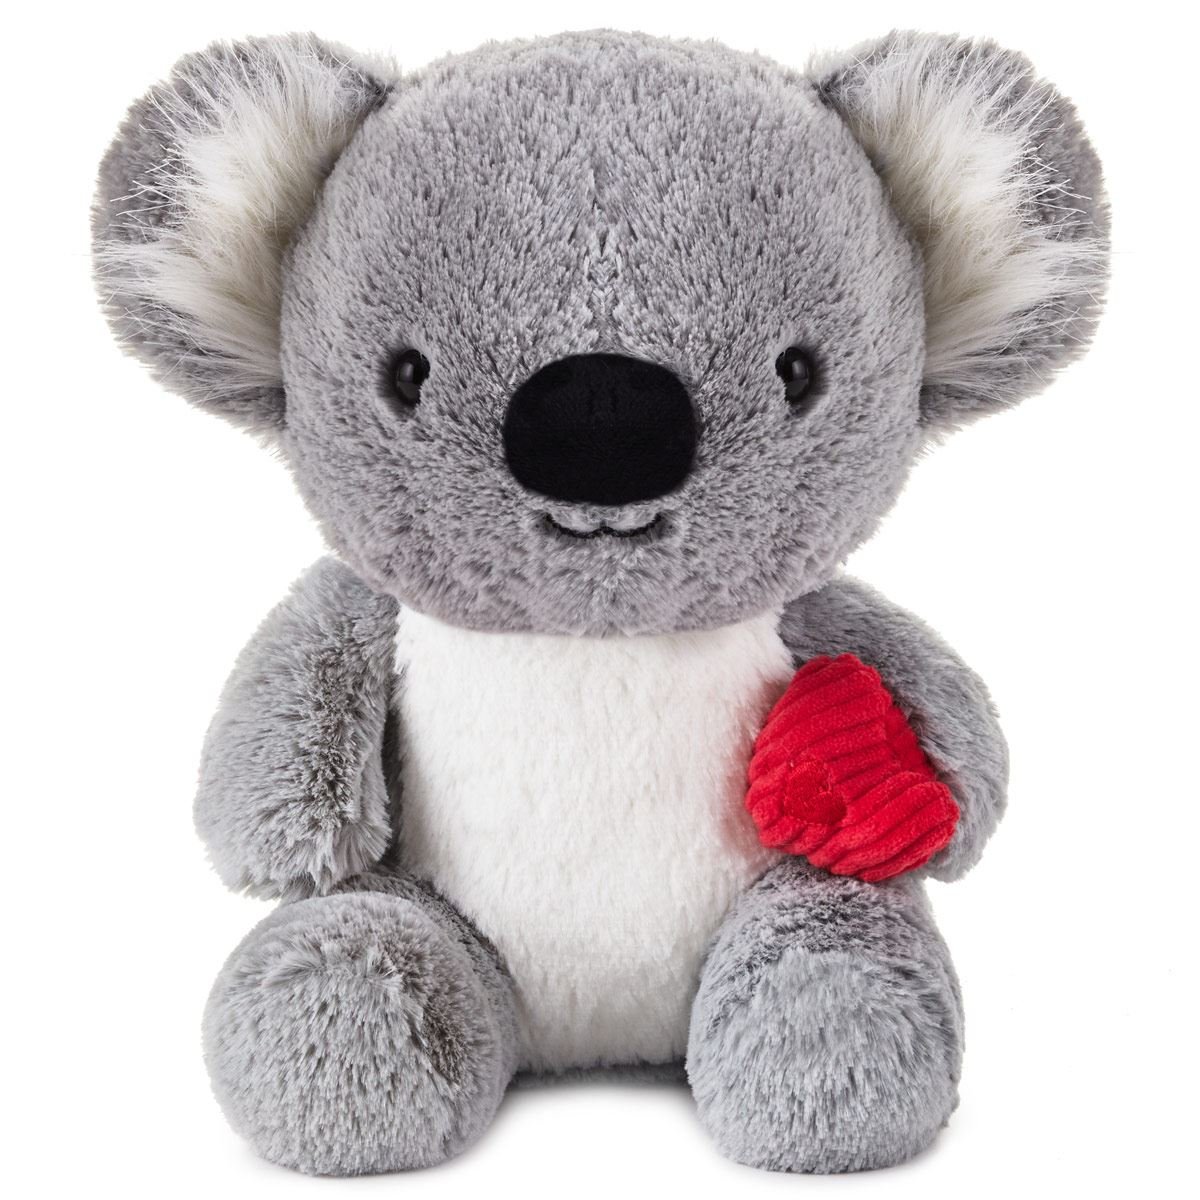 Peluche koala personalizable - mbw, Koalas